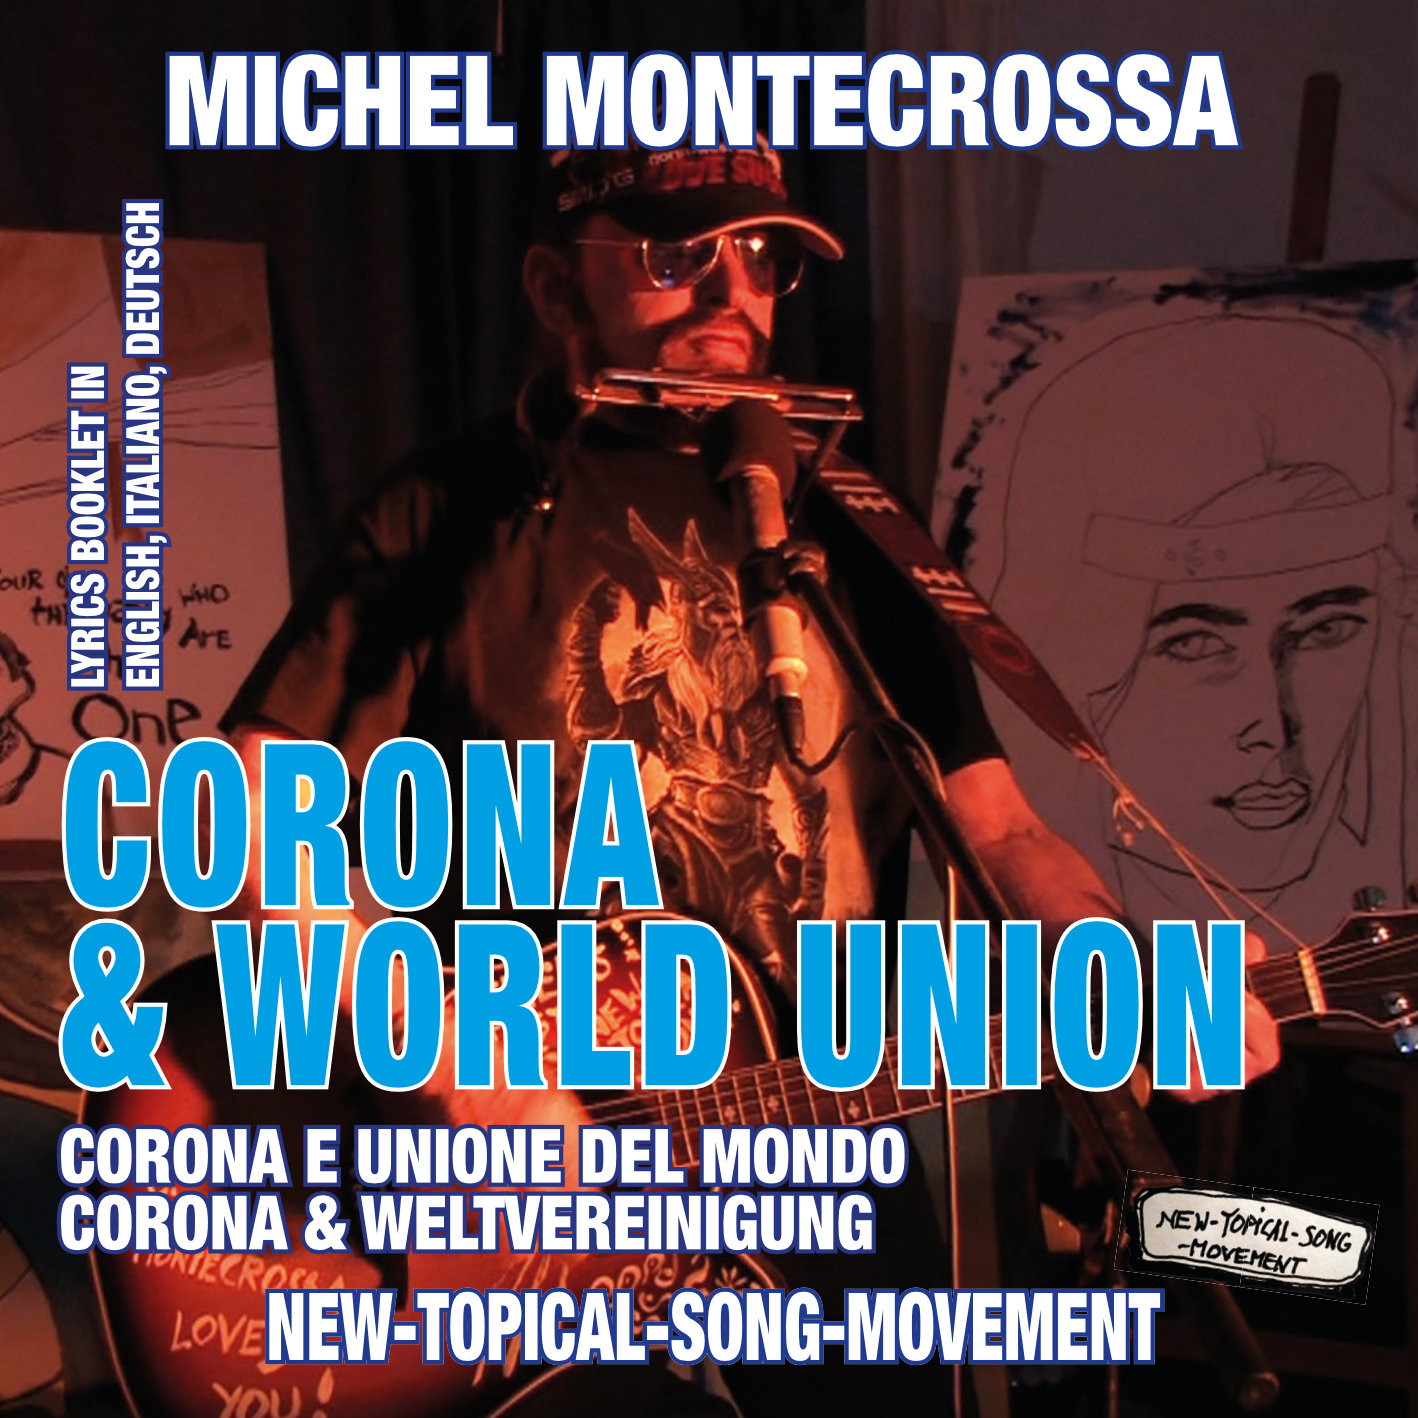 Corona & World Union